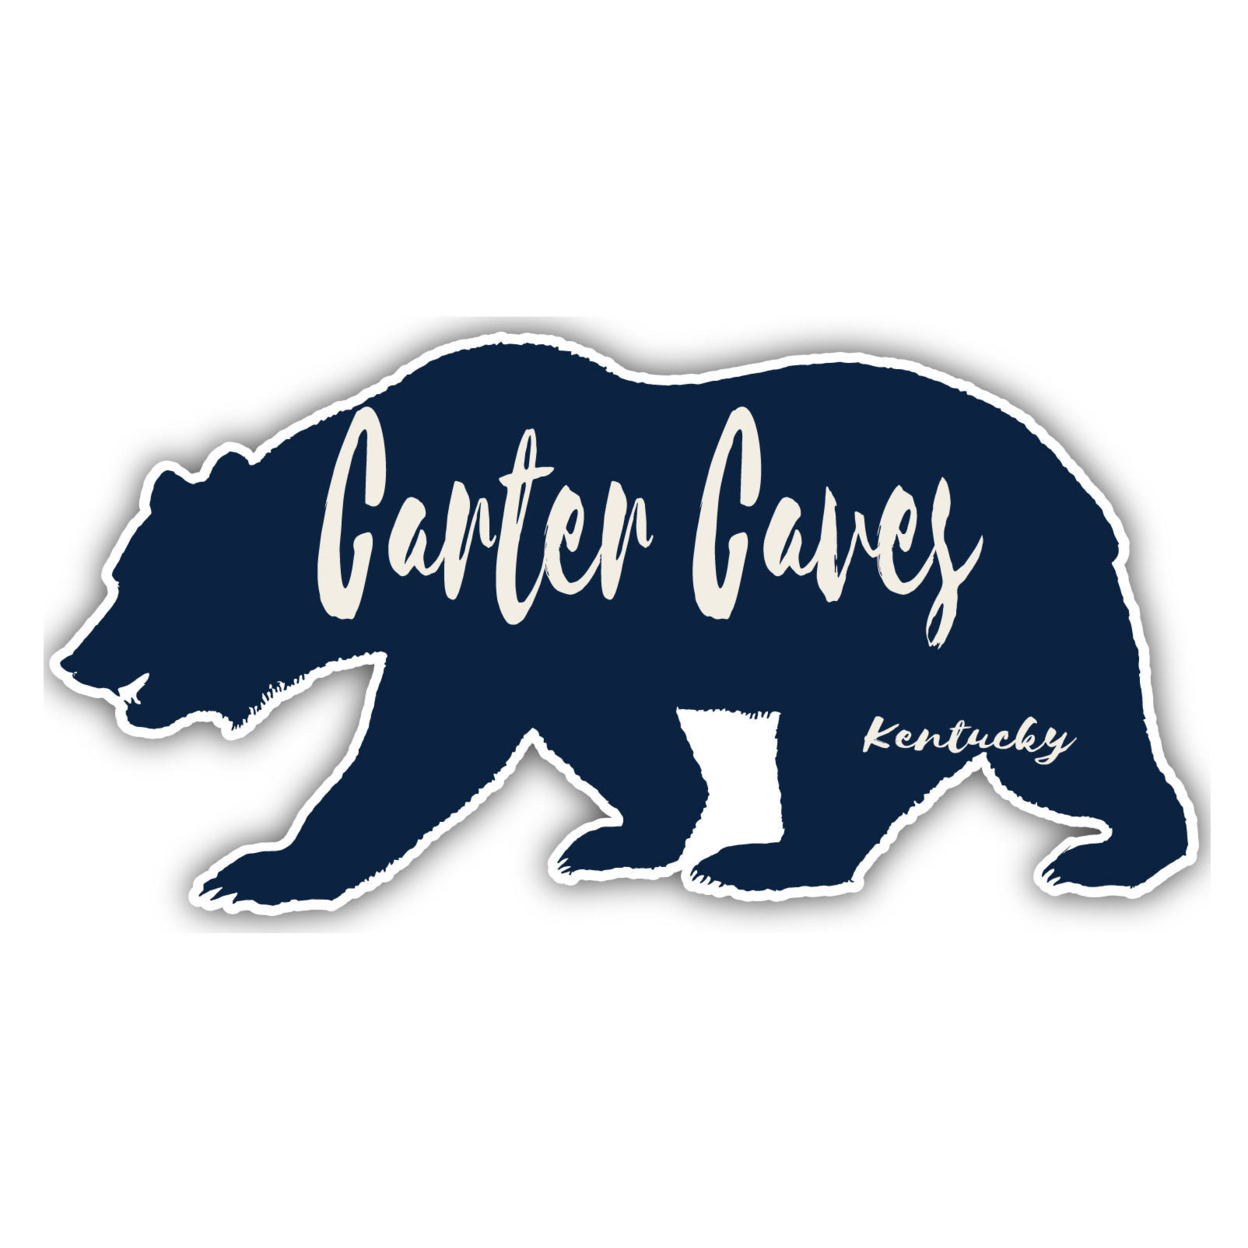 Carter Caves Kentucky Souvenir Decorative Stickers (Choose Theme And Size) - Single Unit, 2-Inch, Bear